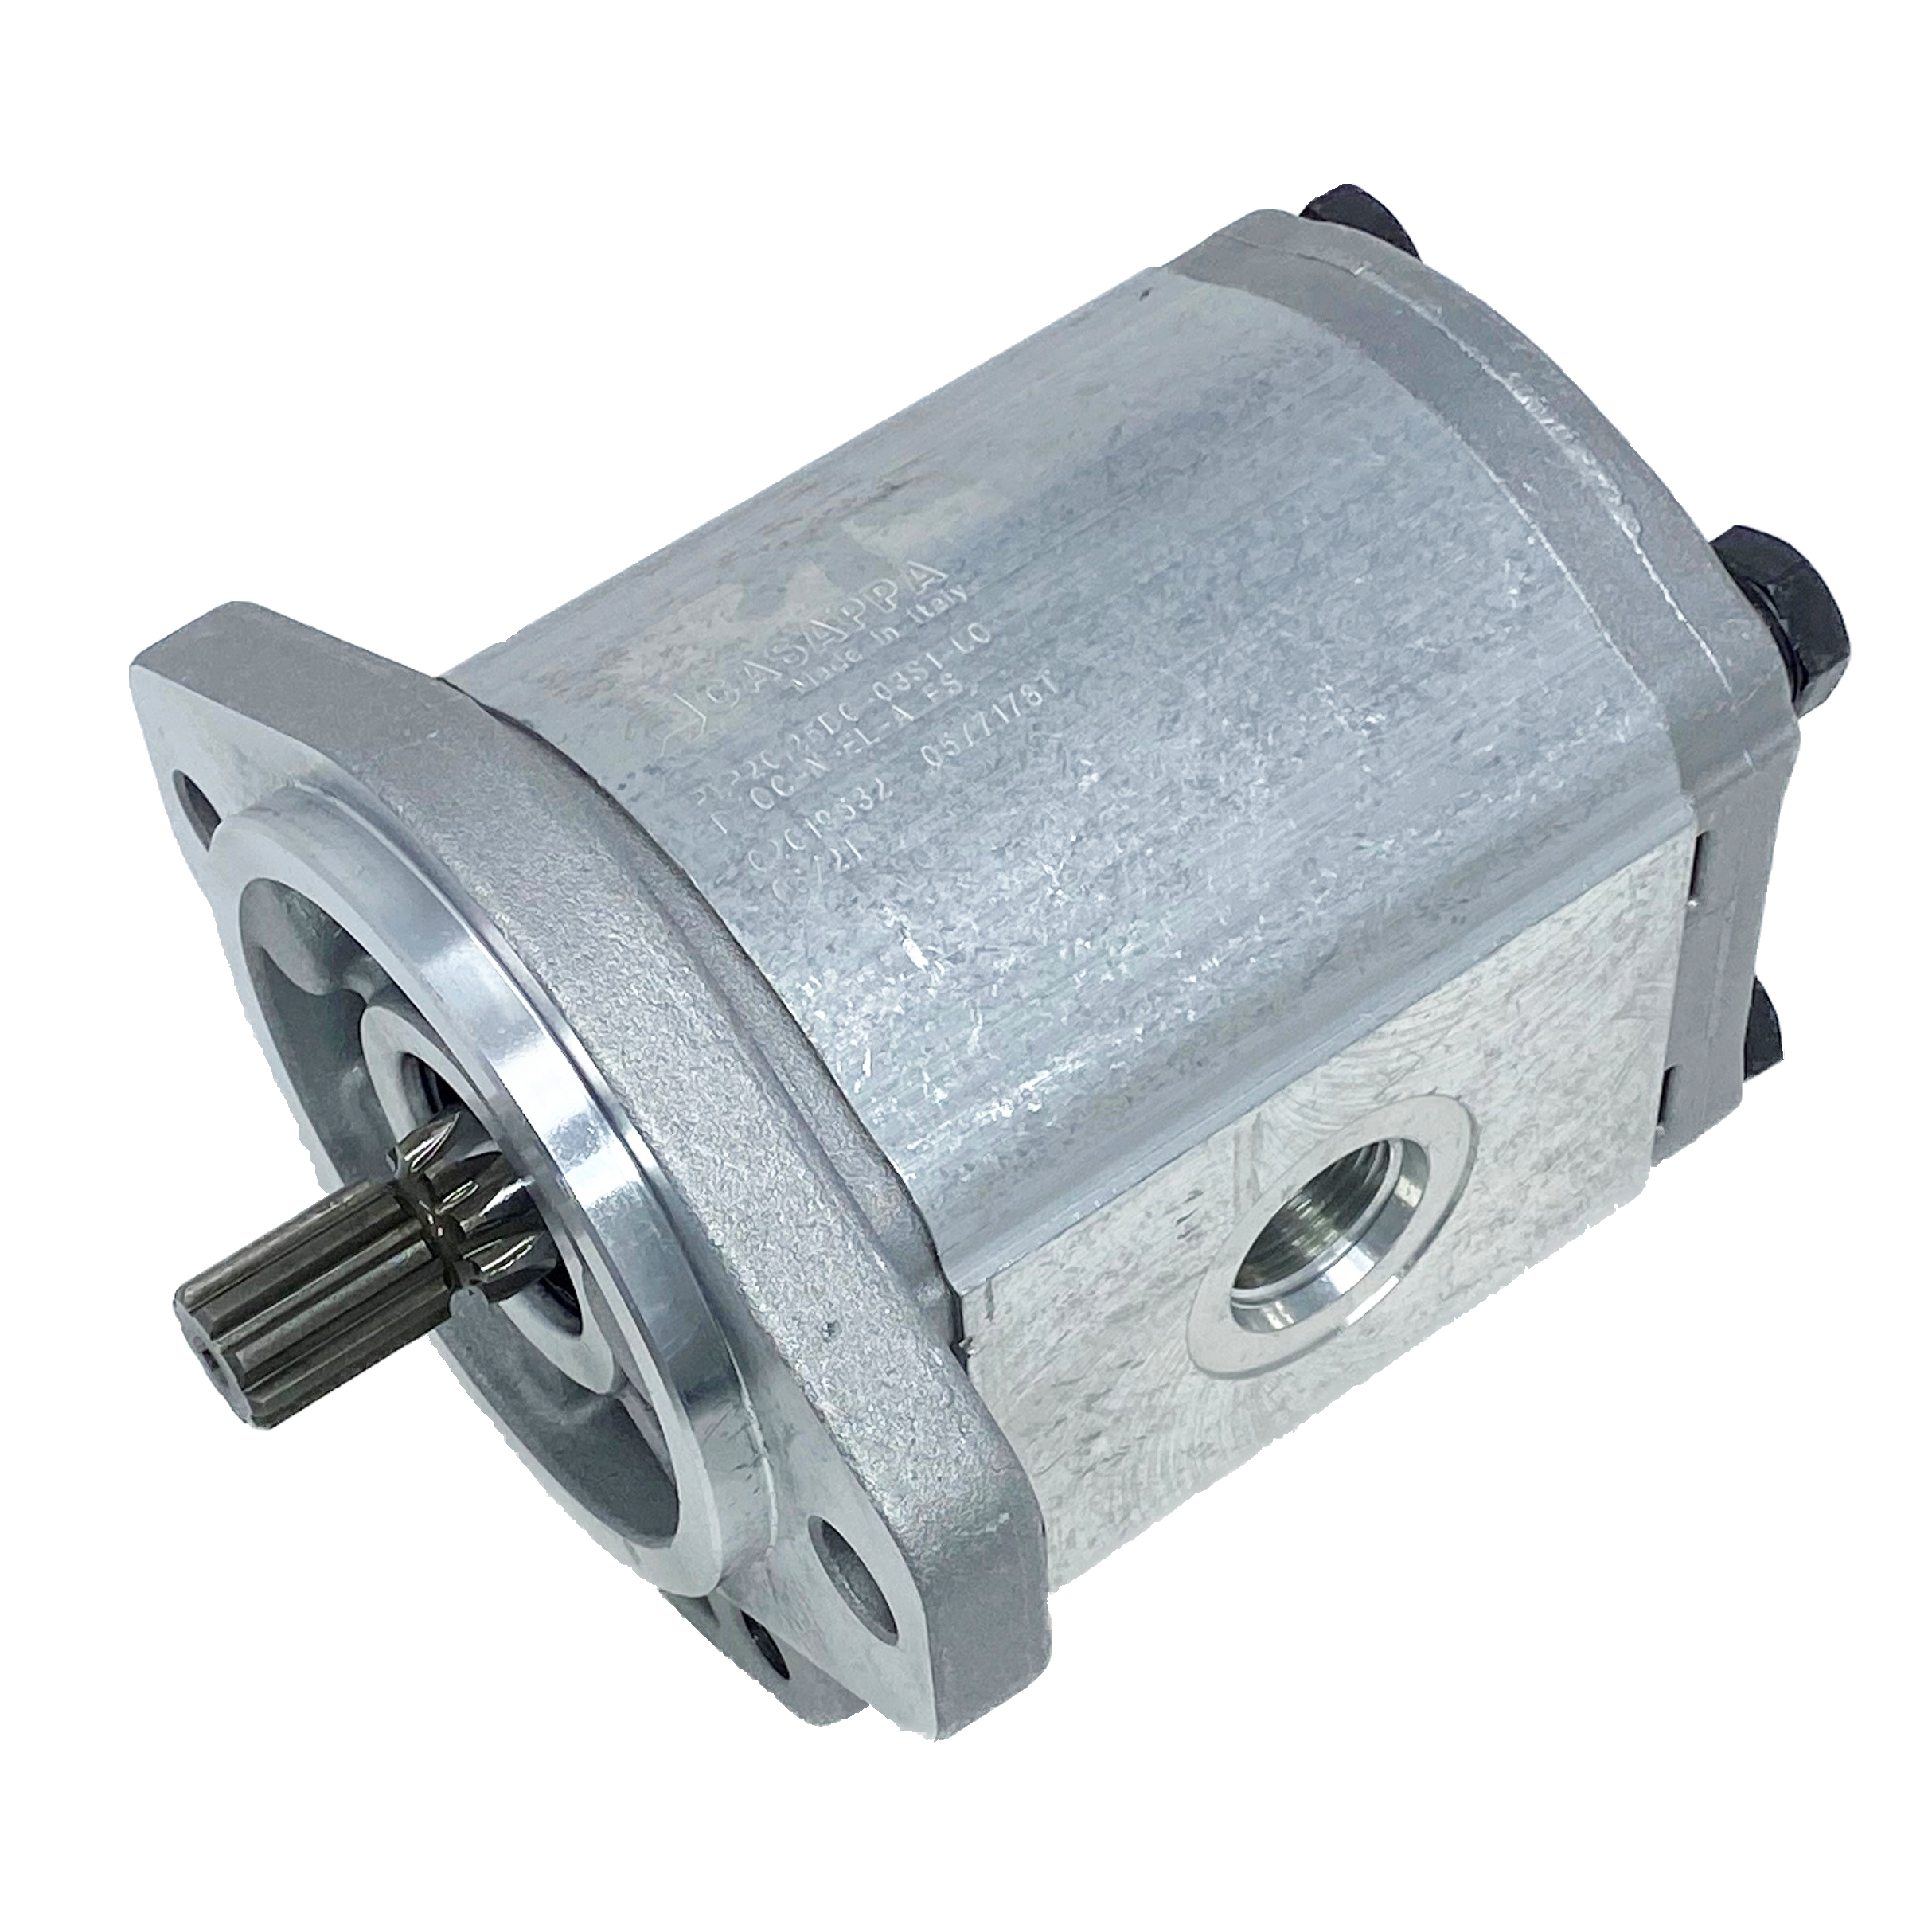 PLM20.31,5B0-03S1-LOC/OD-N-EL : Casappa Polaris Gear Motor, 33.03cc, 1885psi Rated, 2465RPM, Reversible Interior Drain, 9T 16/32dp Shaft, SAE A 2-Bolt Flange, 0.625 (5/8") #10 SAE Inlet, 0.75 (3/4") #12 SAE Outlet, Aluminum Body & Flange